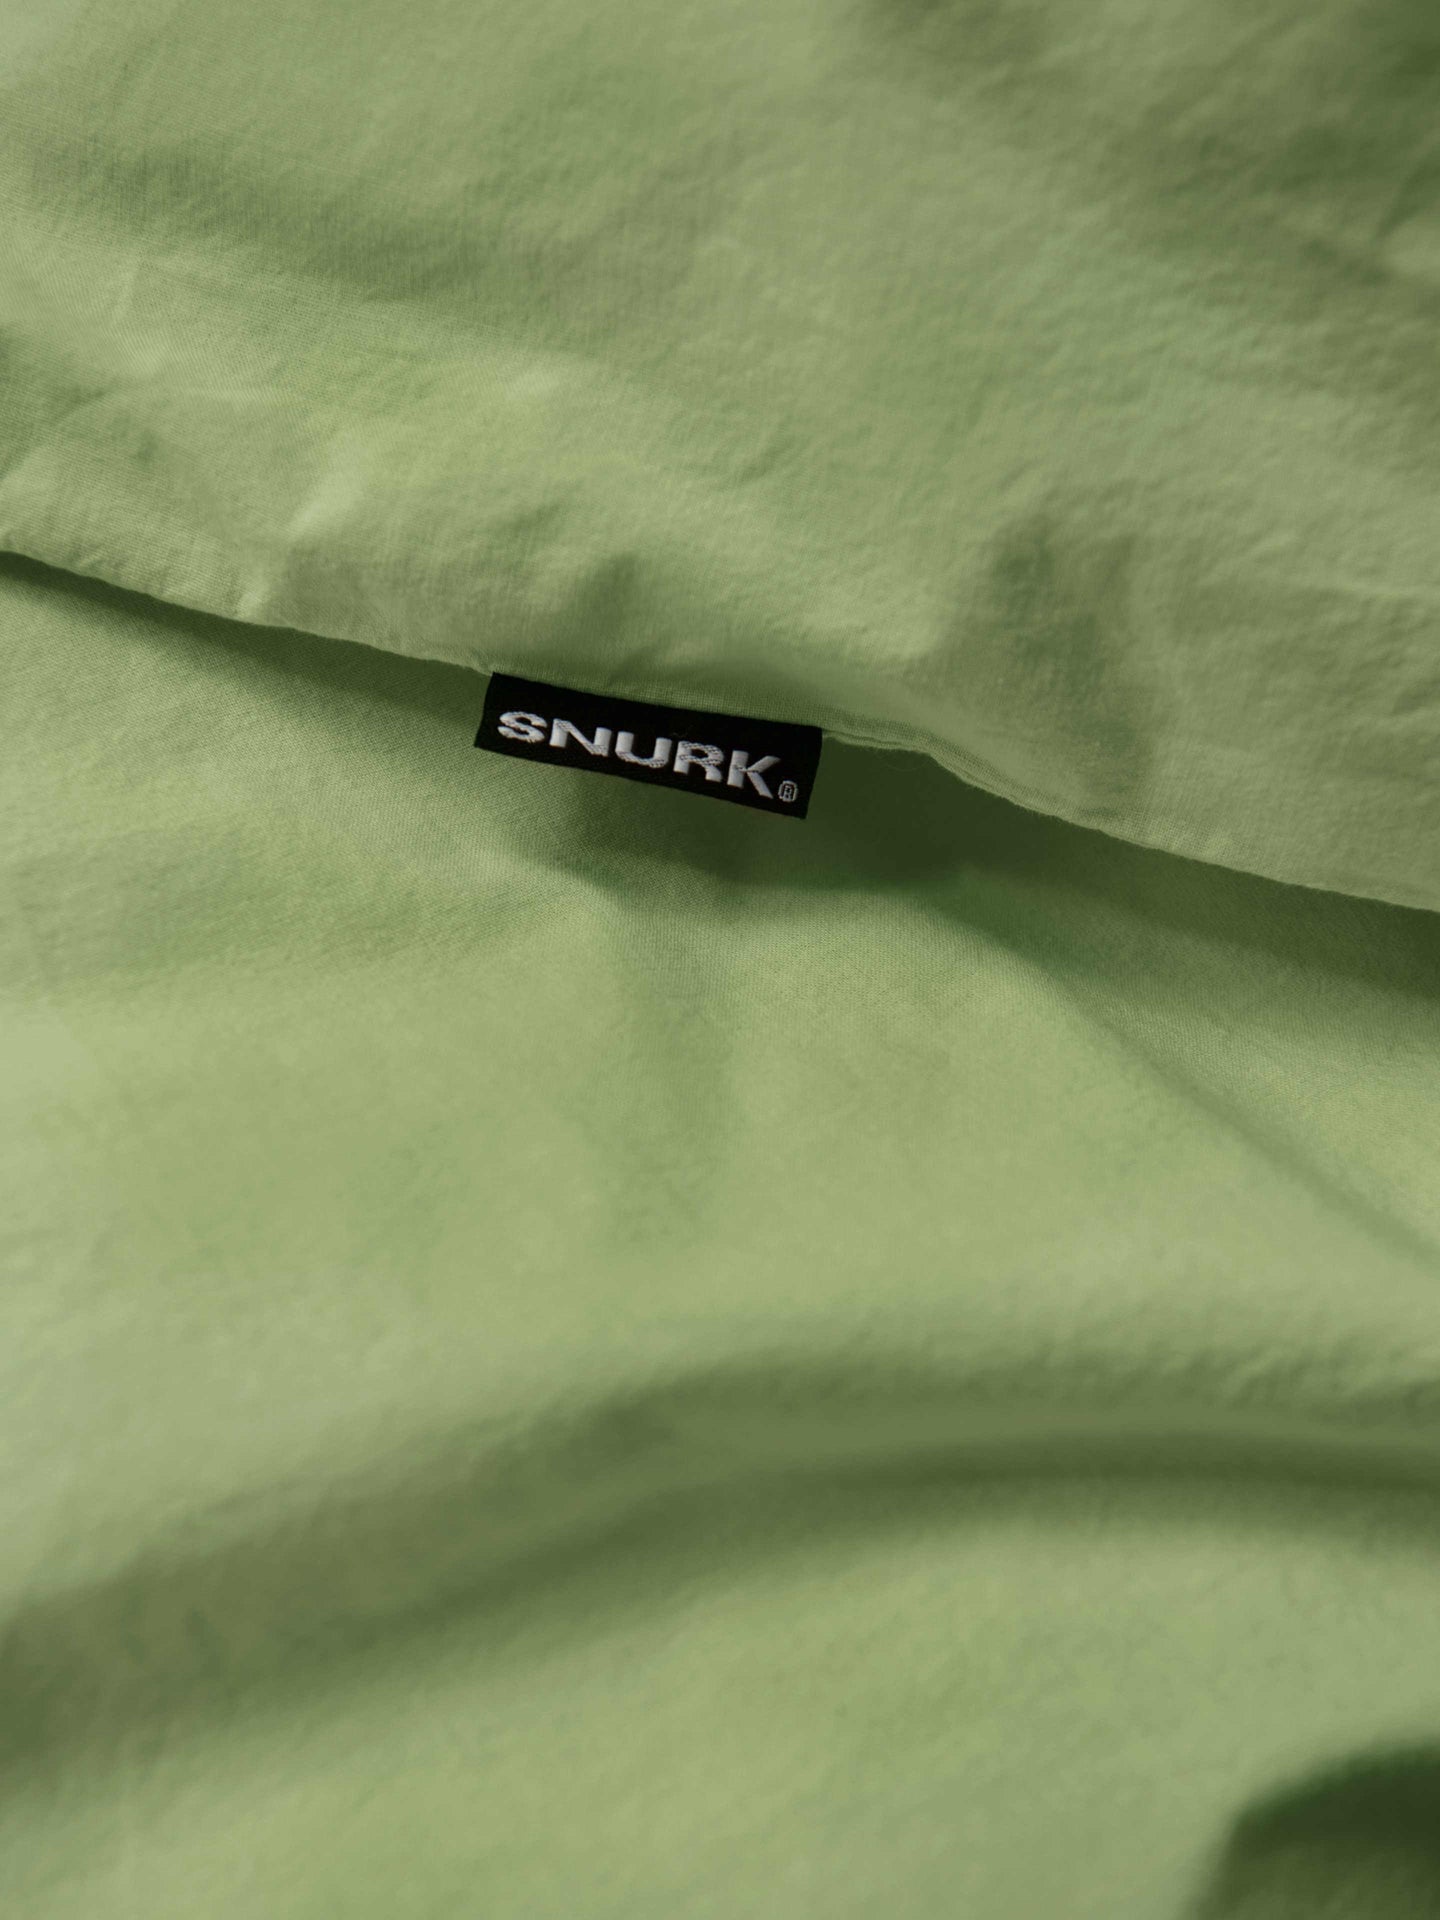 Green pillowcase